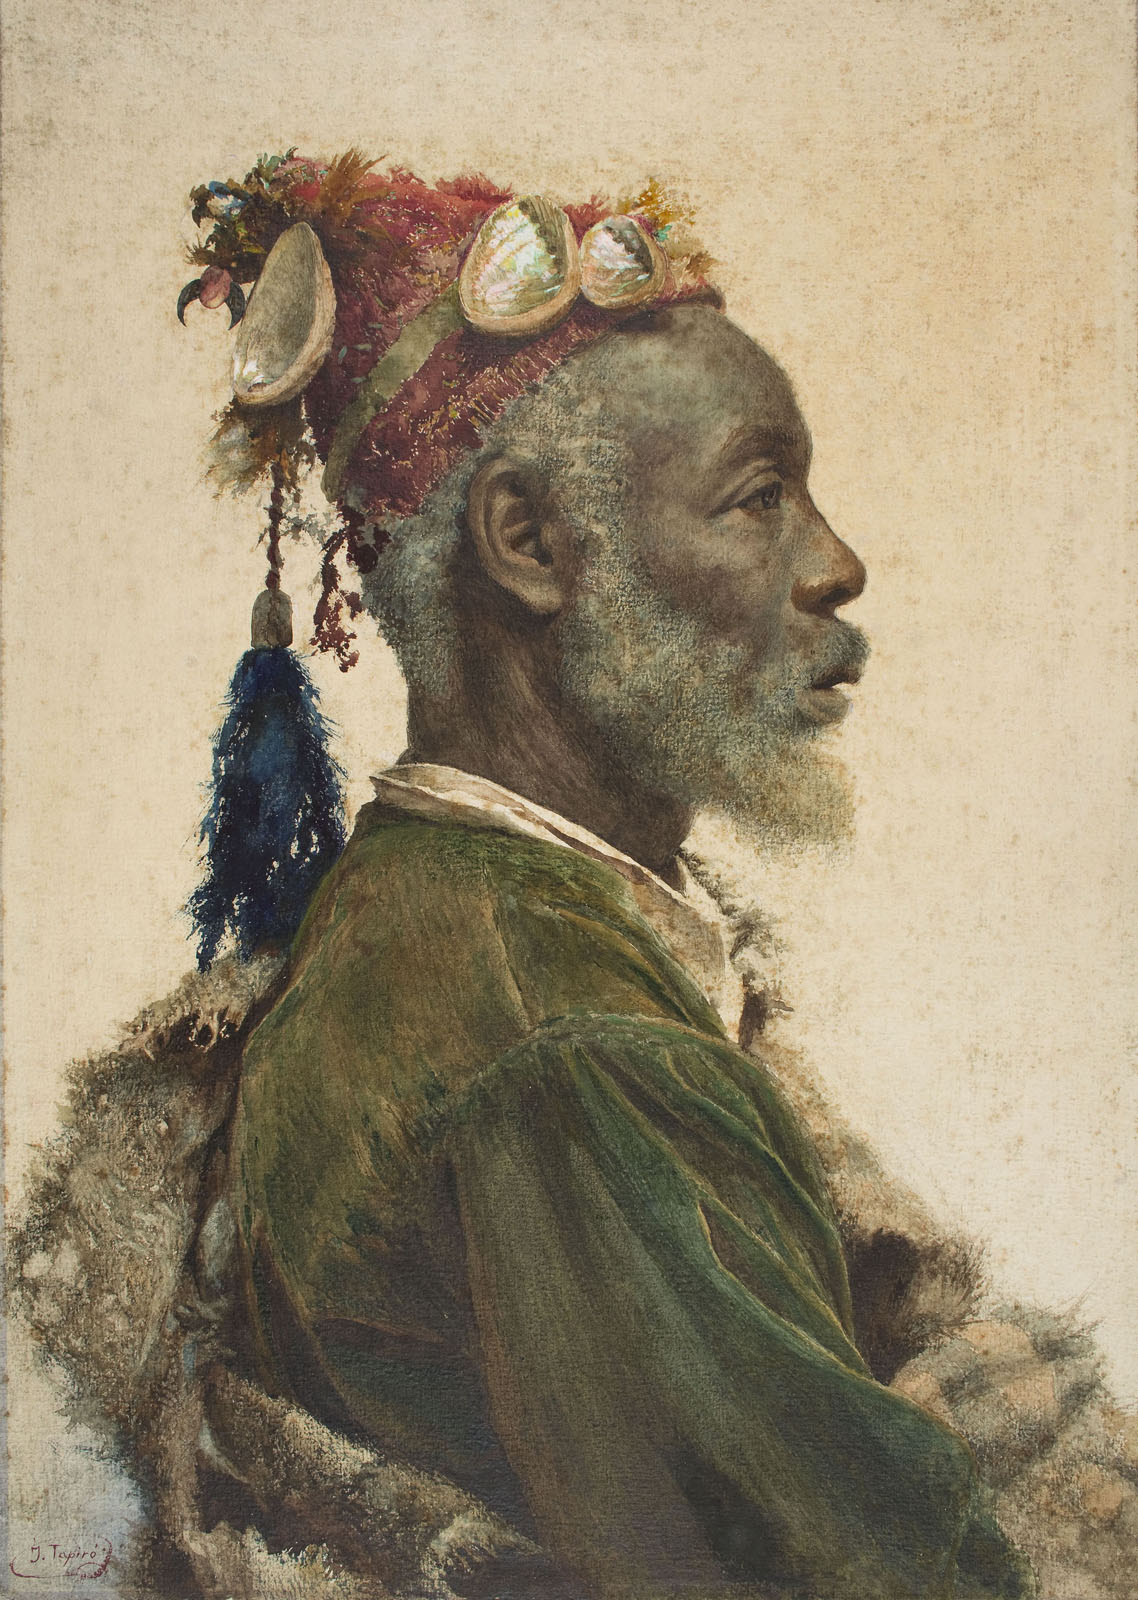 Darcawi Holy Man of Marrakech ca. 1895 by Josep Tapiro (1836-1913)  Museu Nacional d Art de Catalunya Barcelona